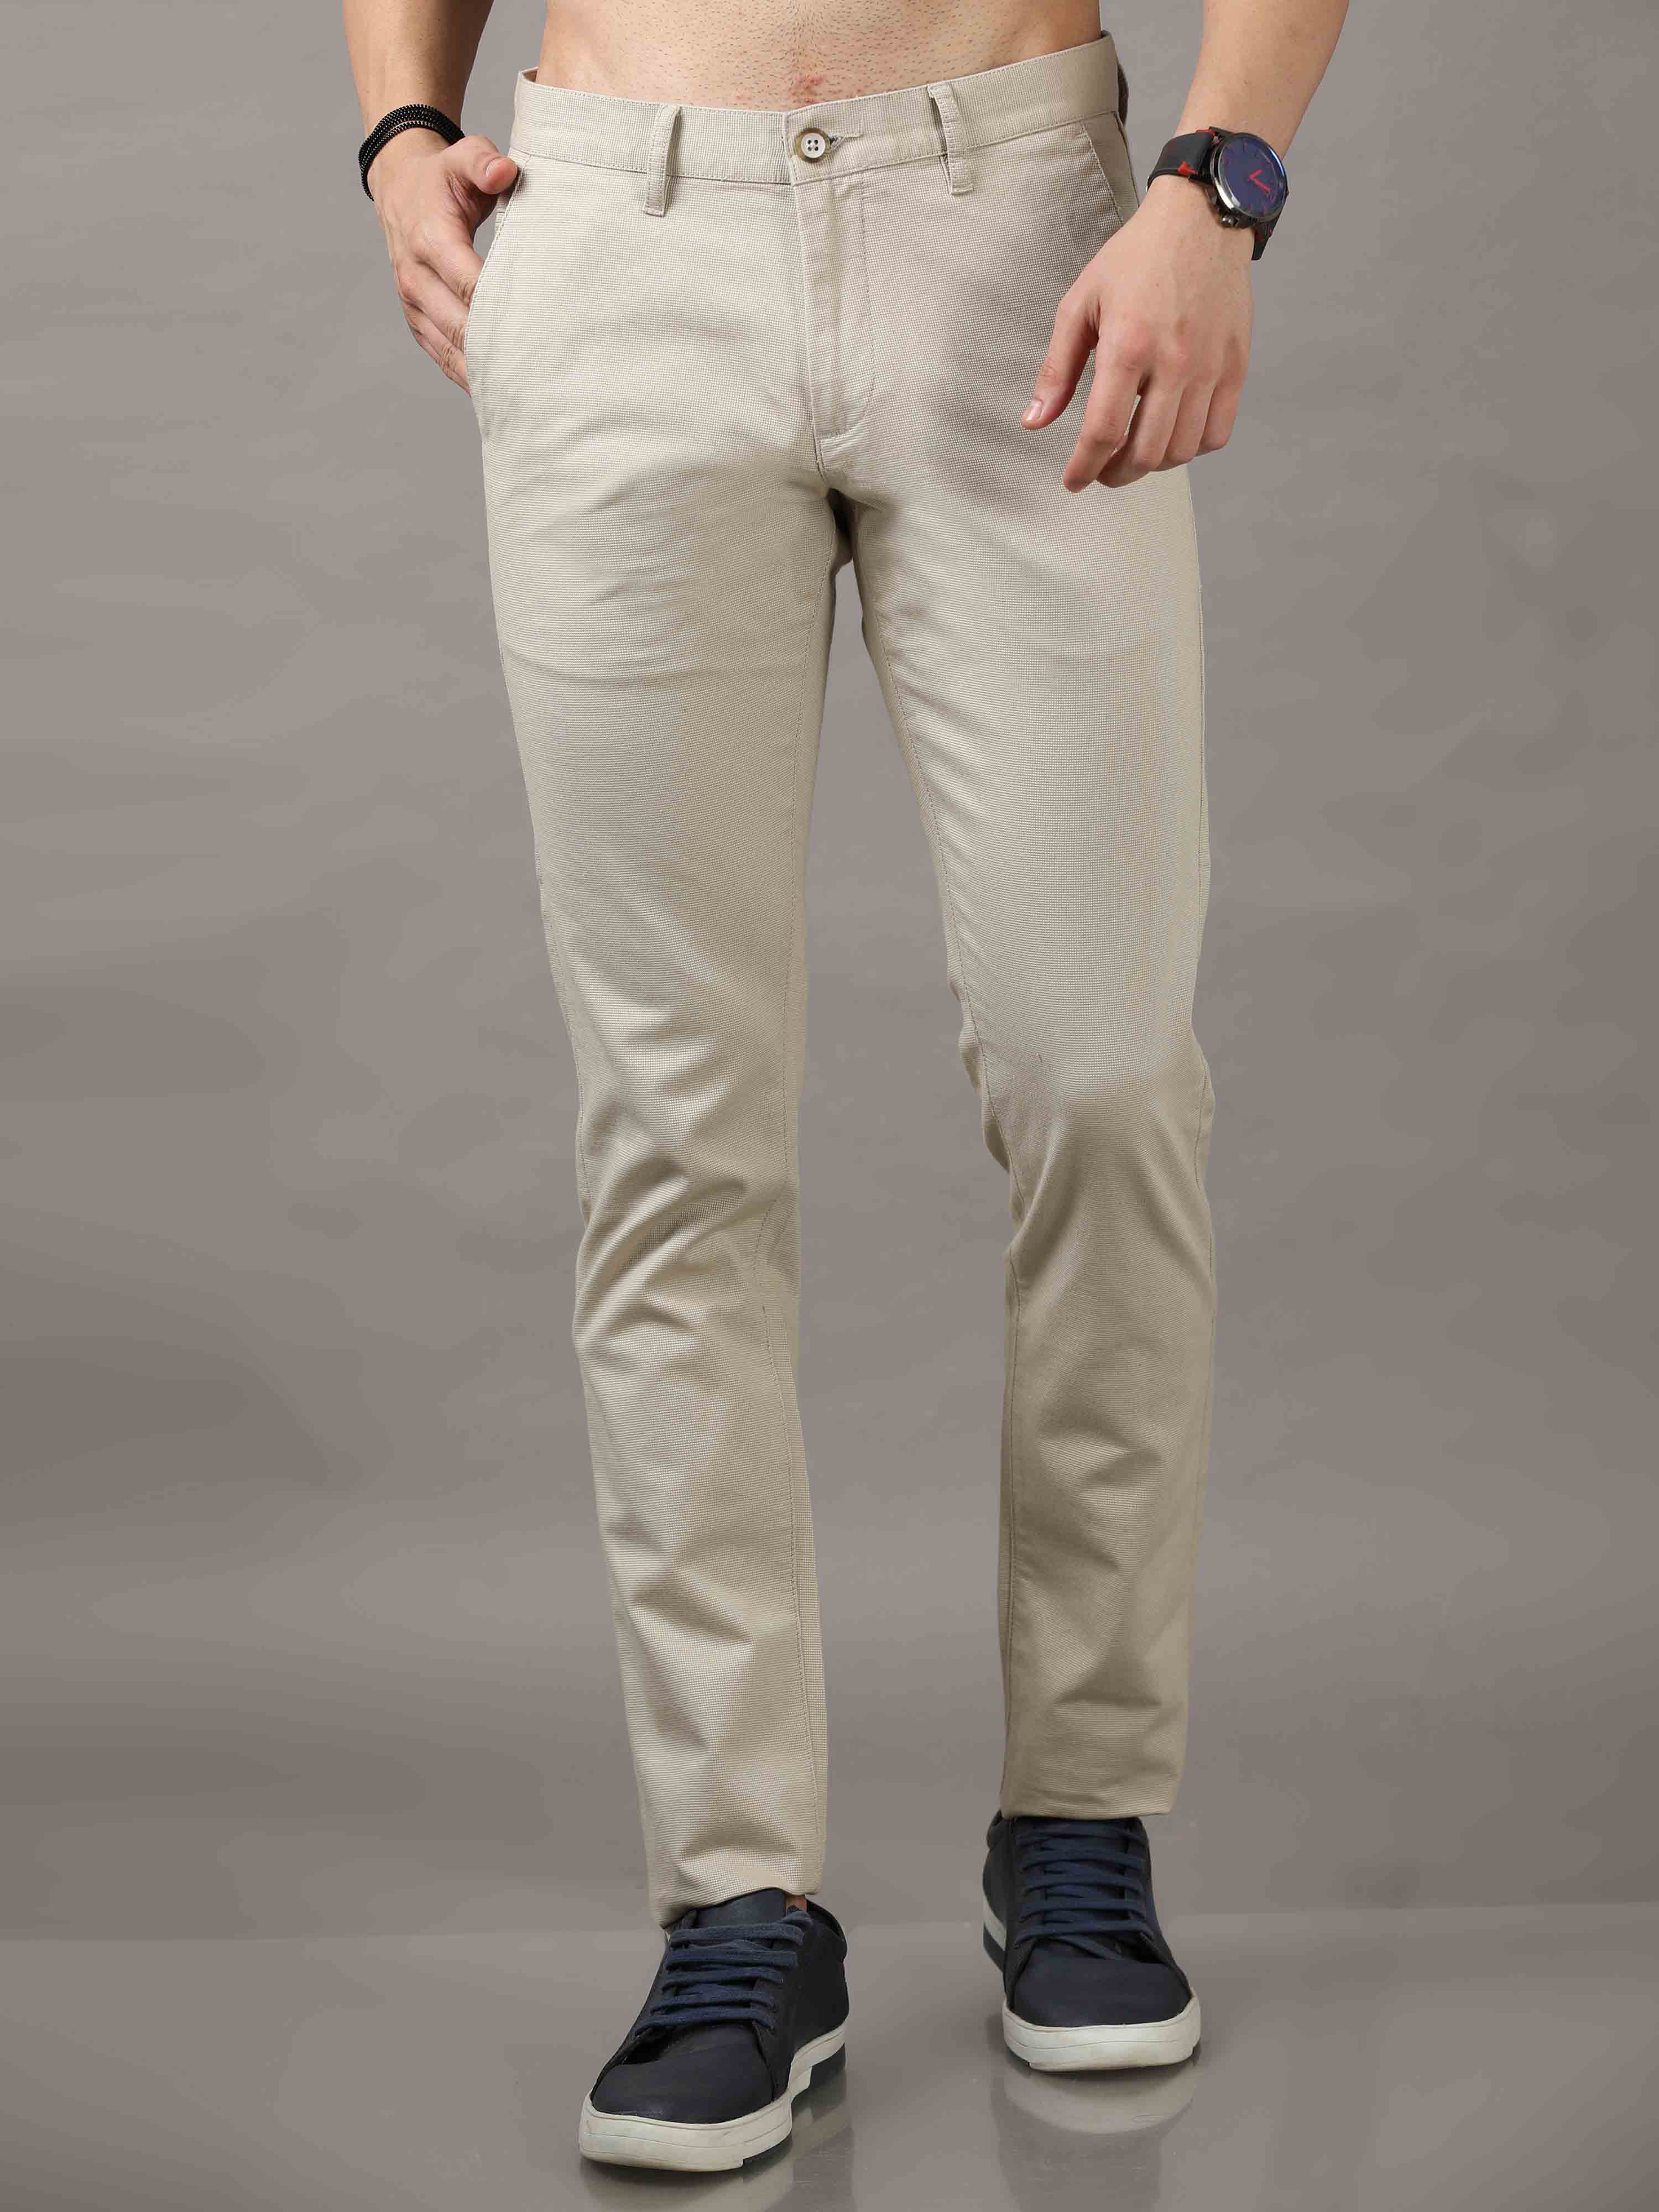 Men's Pants - Buy trousers for men online | OAS